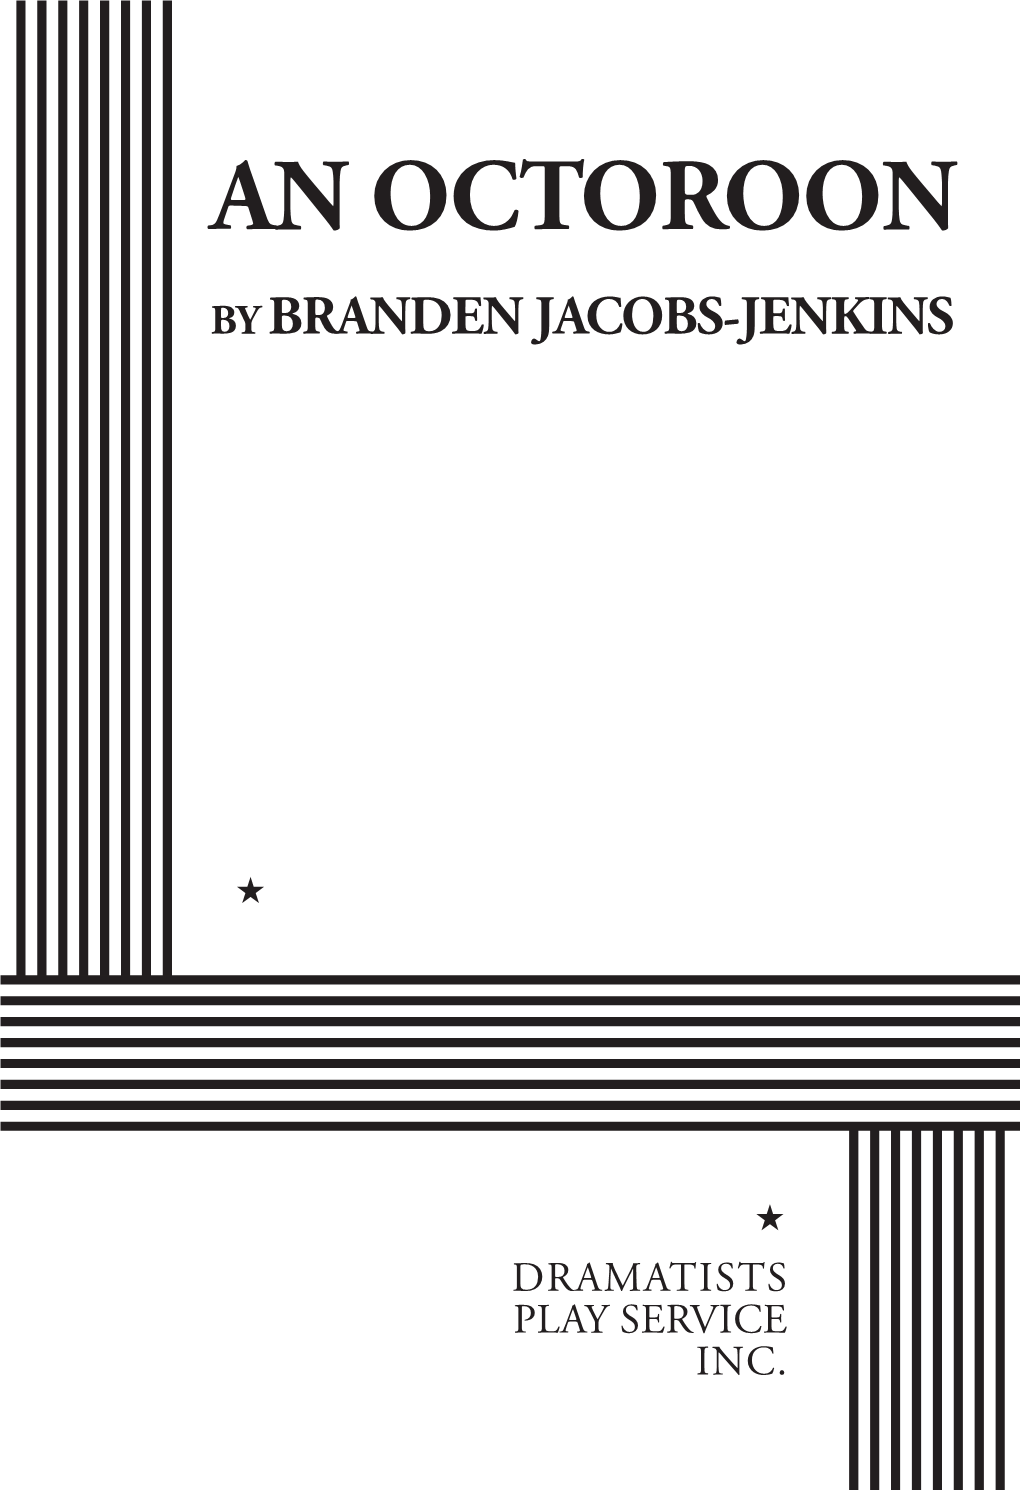 An Octoroon by Branden Jacobs-Jenkins